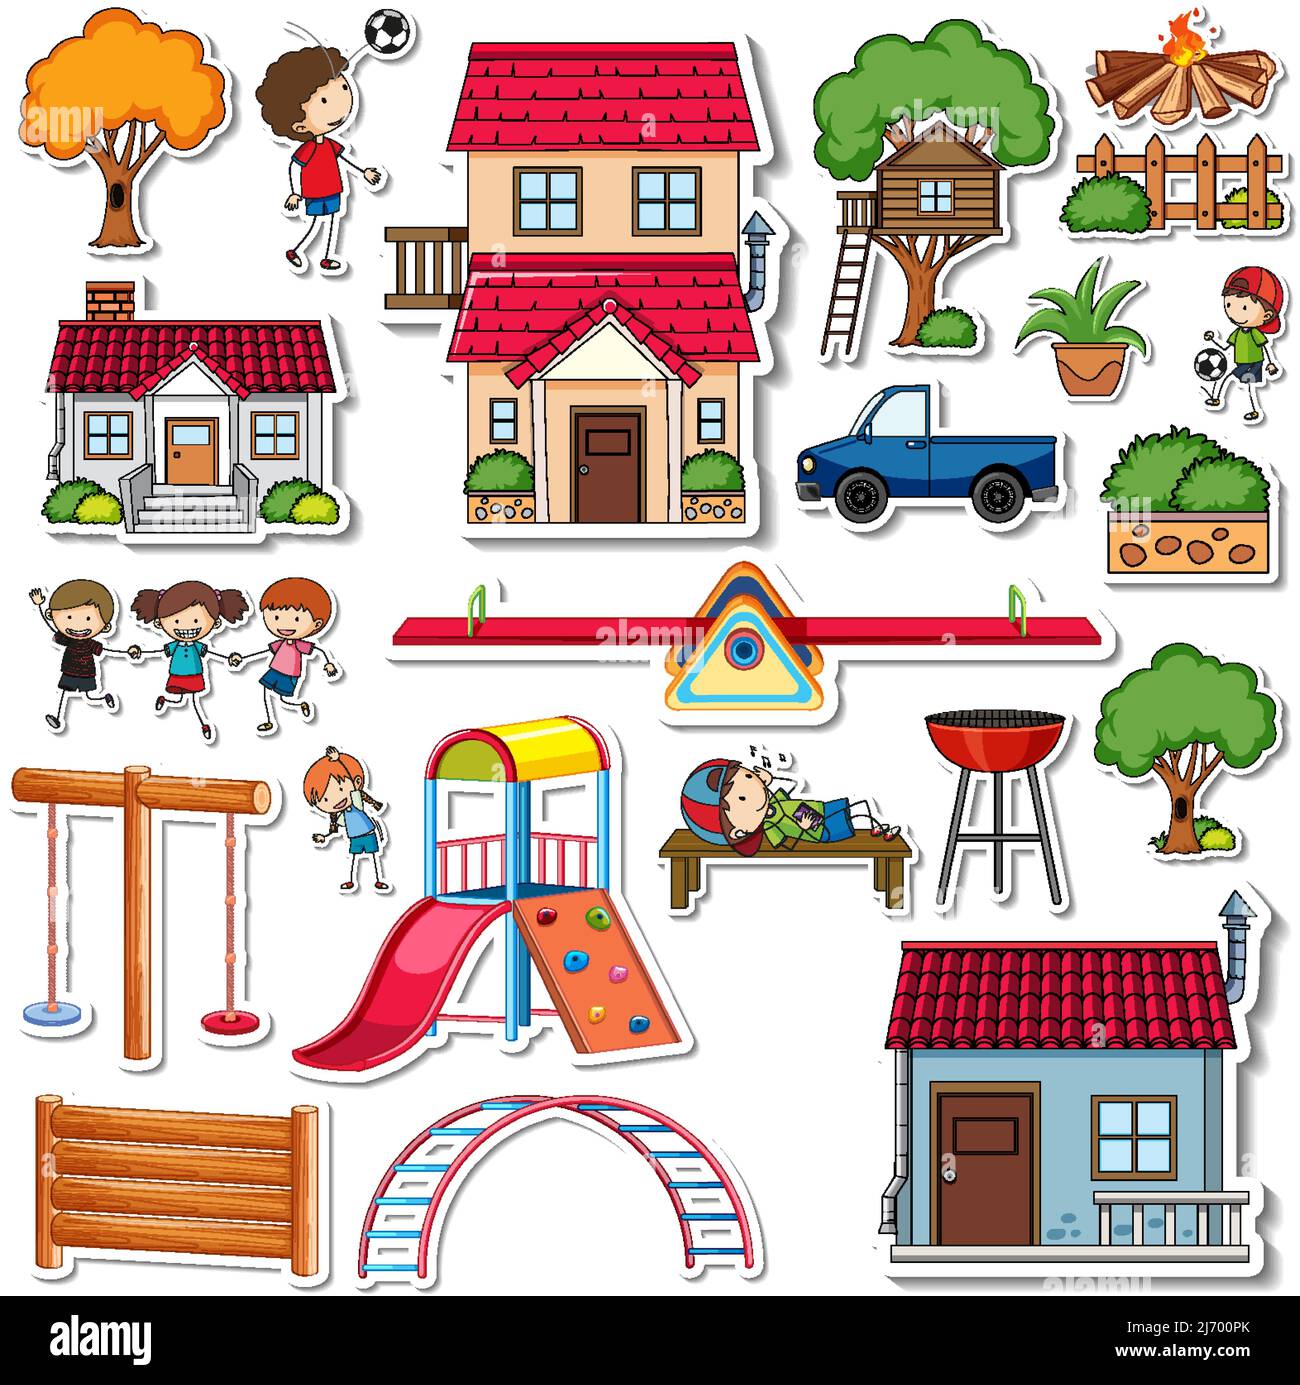 https://c8.alamy.com/comp/2J700PK/sticker-pack-of-playground-objects-illustration-2J700PK.jpg